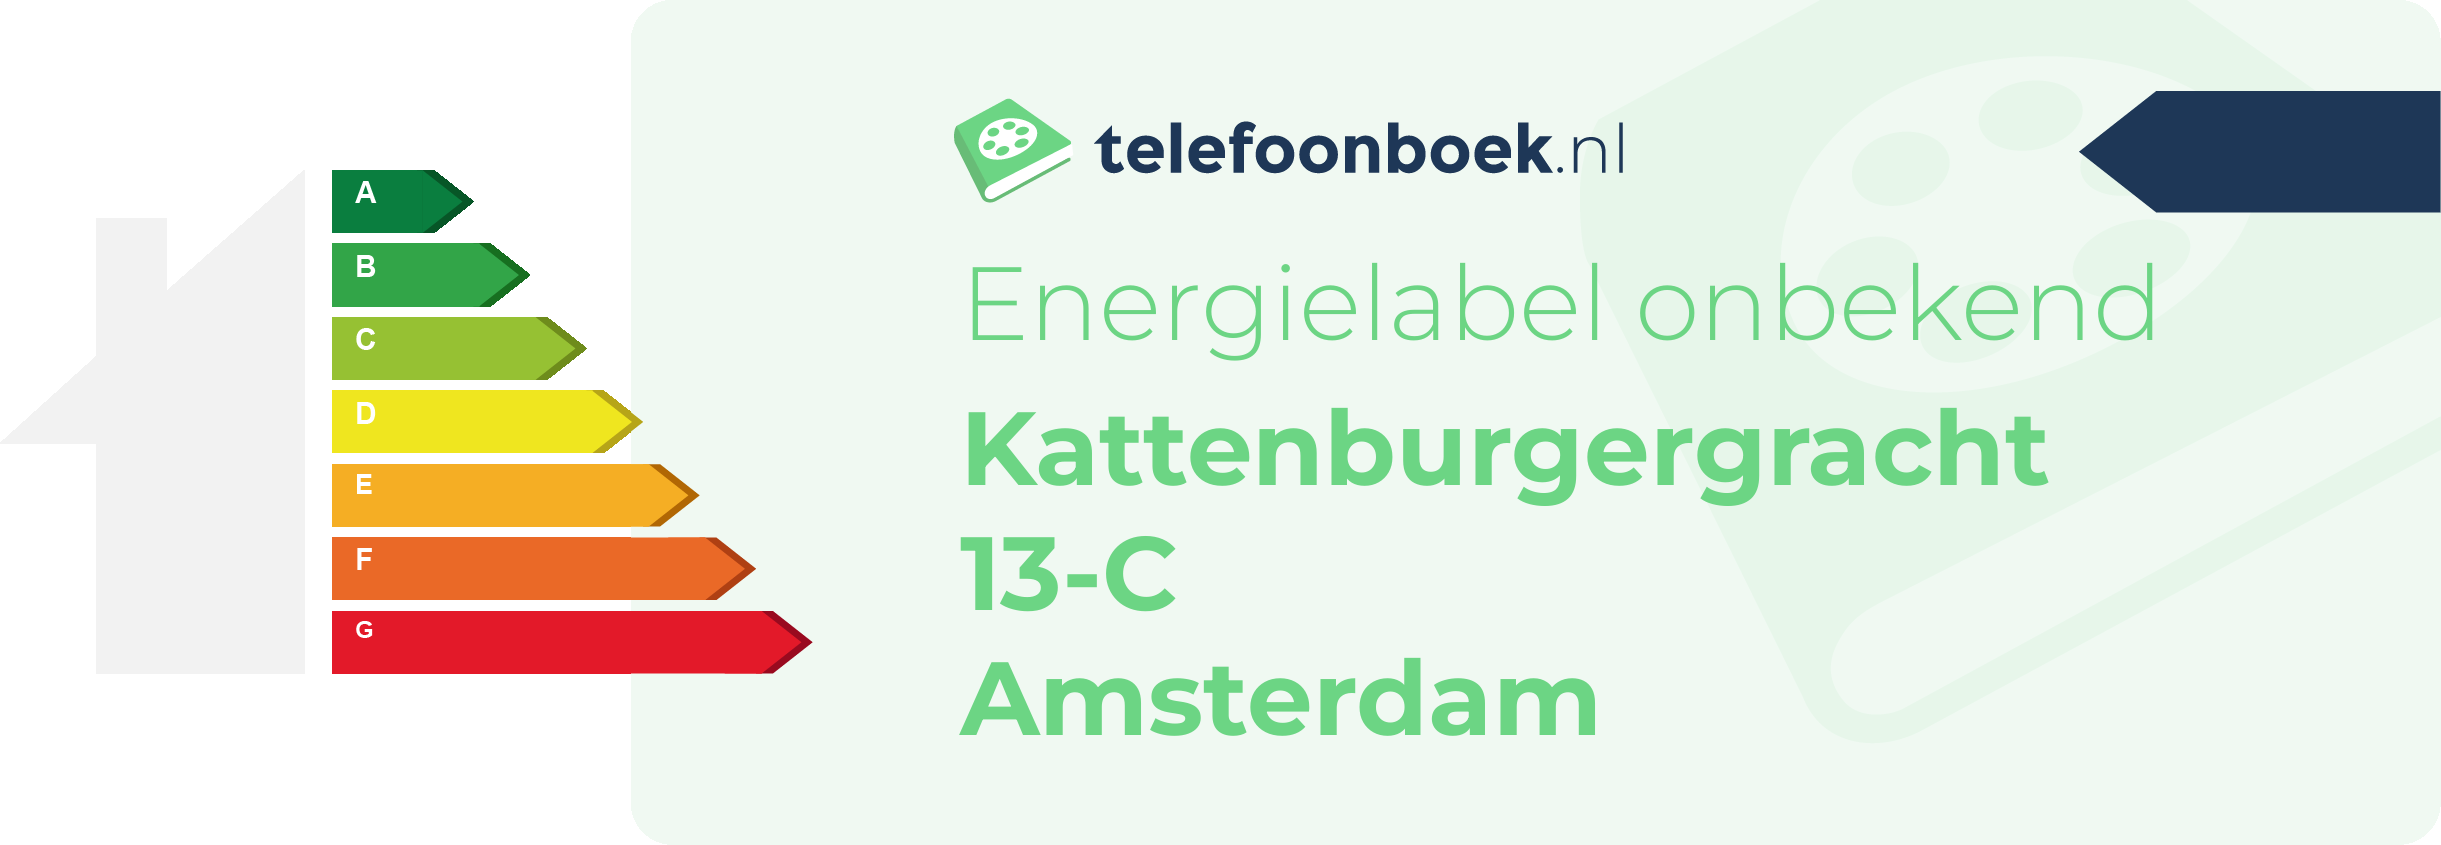 Energielabel Kattenburgergracht 13-C Amsterdam